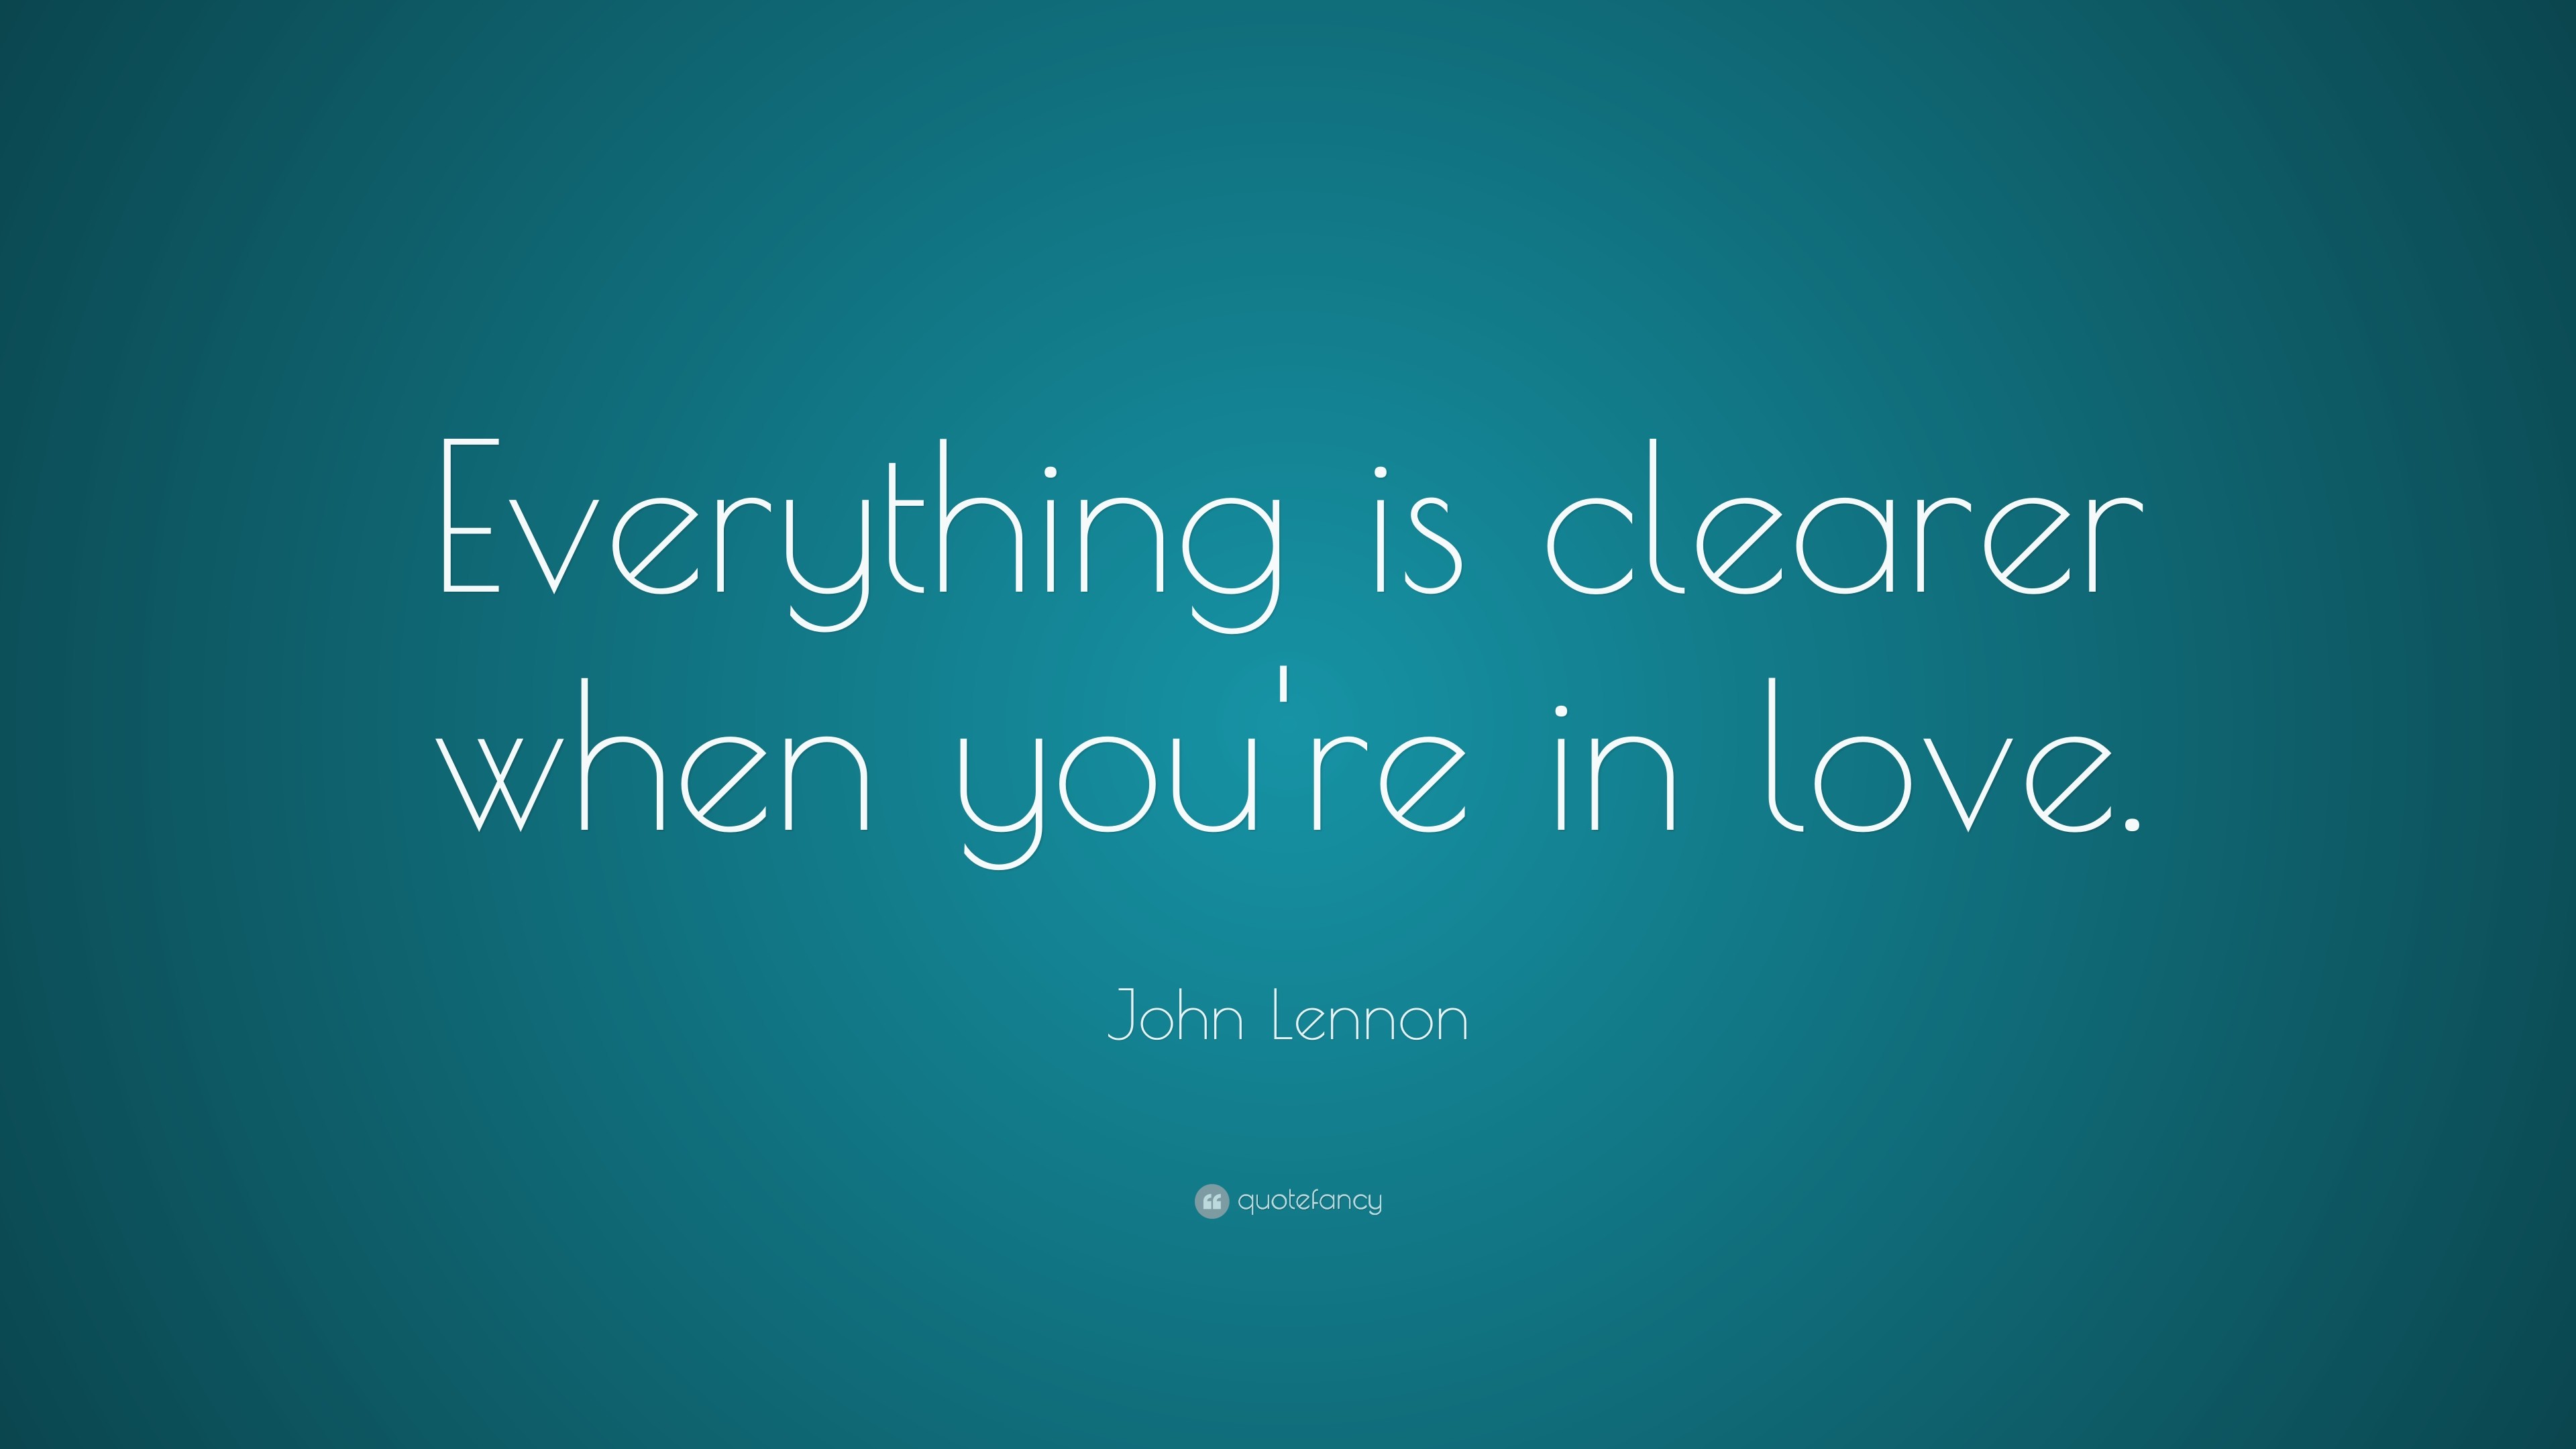 3840x2160 John Lennon Quotes (15 wallpapers) - Quotefancy